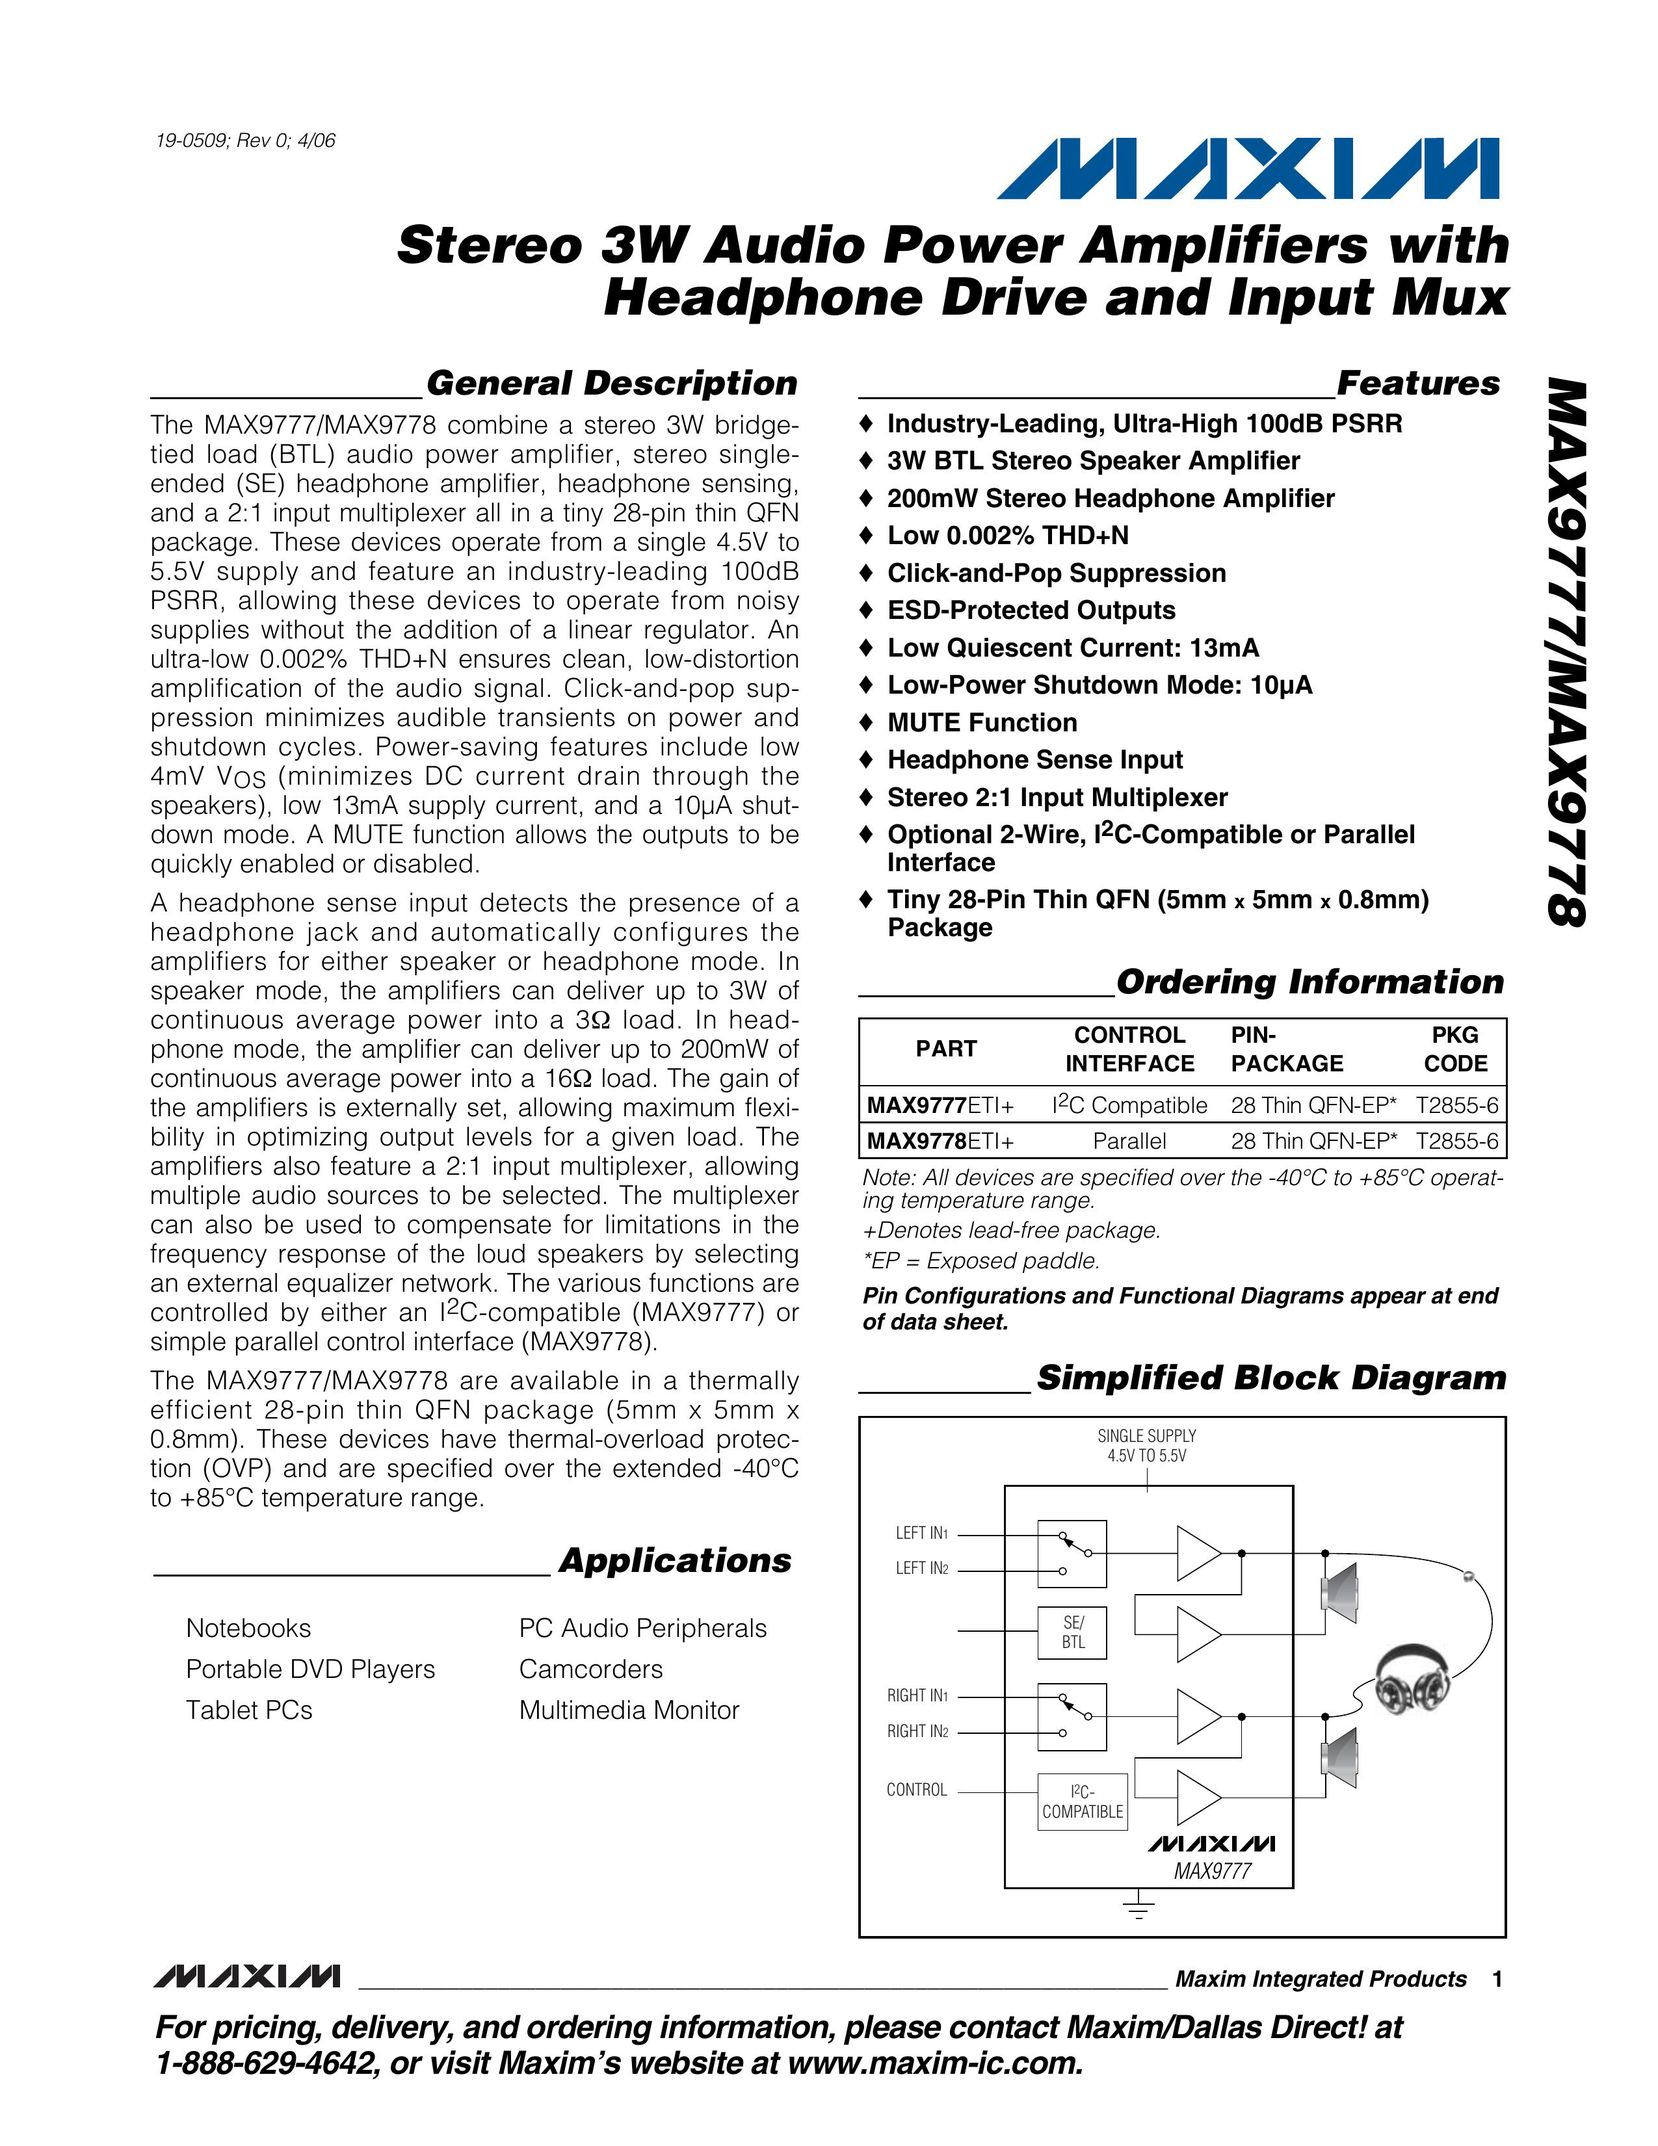 Maxim MAX9778 Stereo Amplifier User Manual